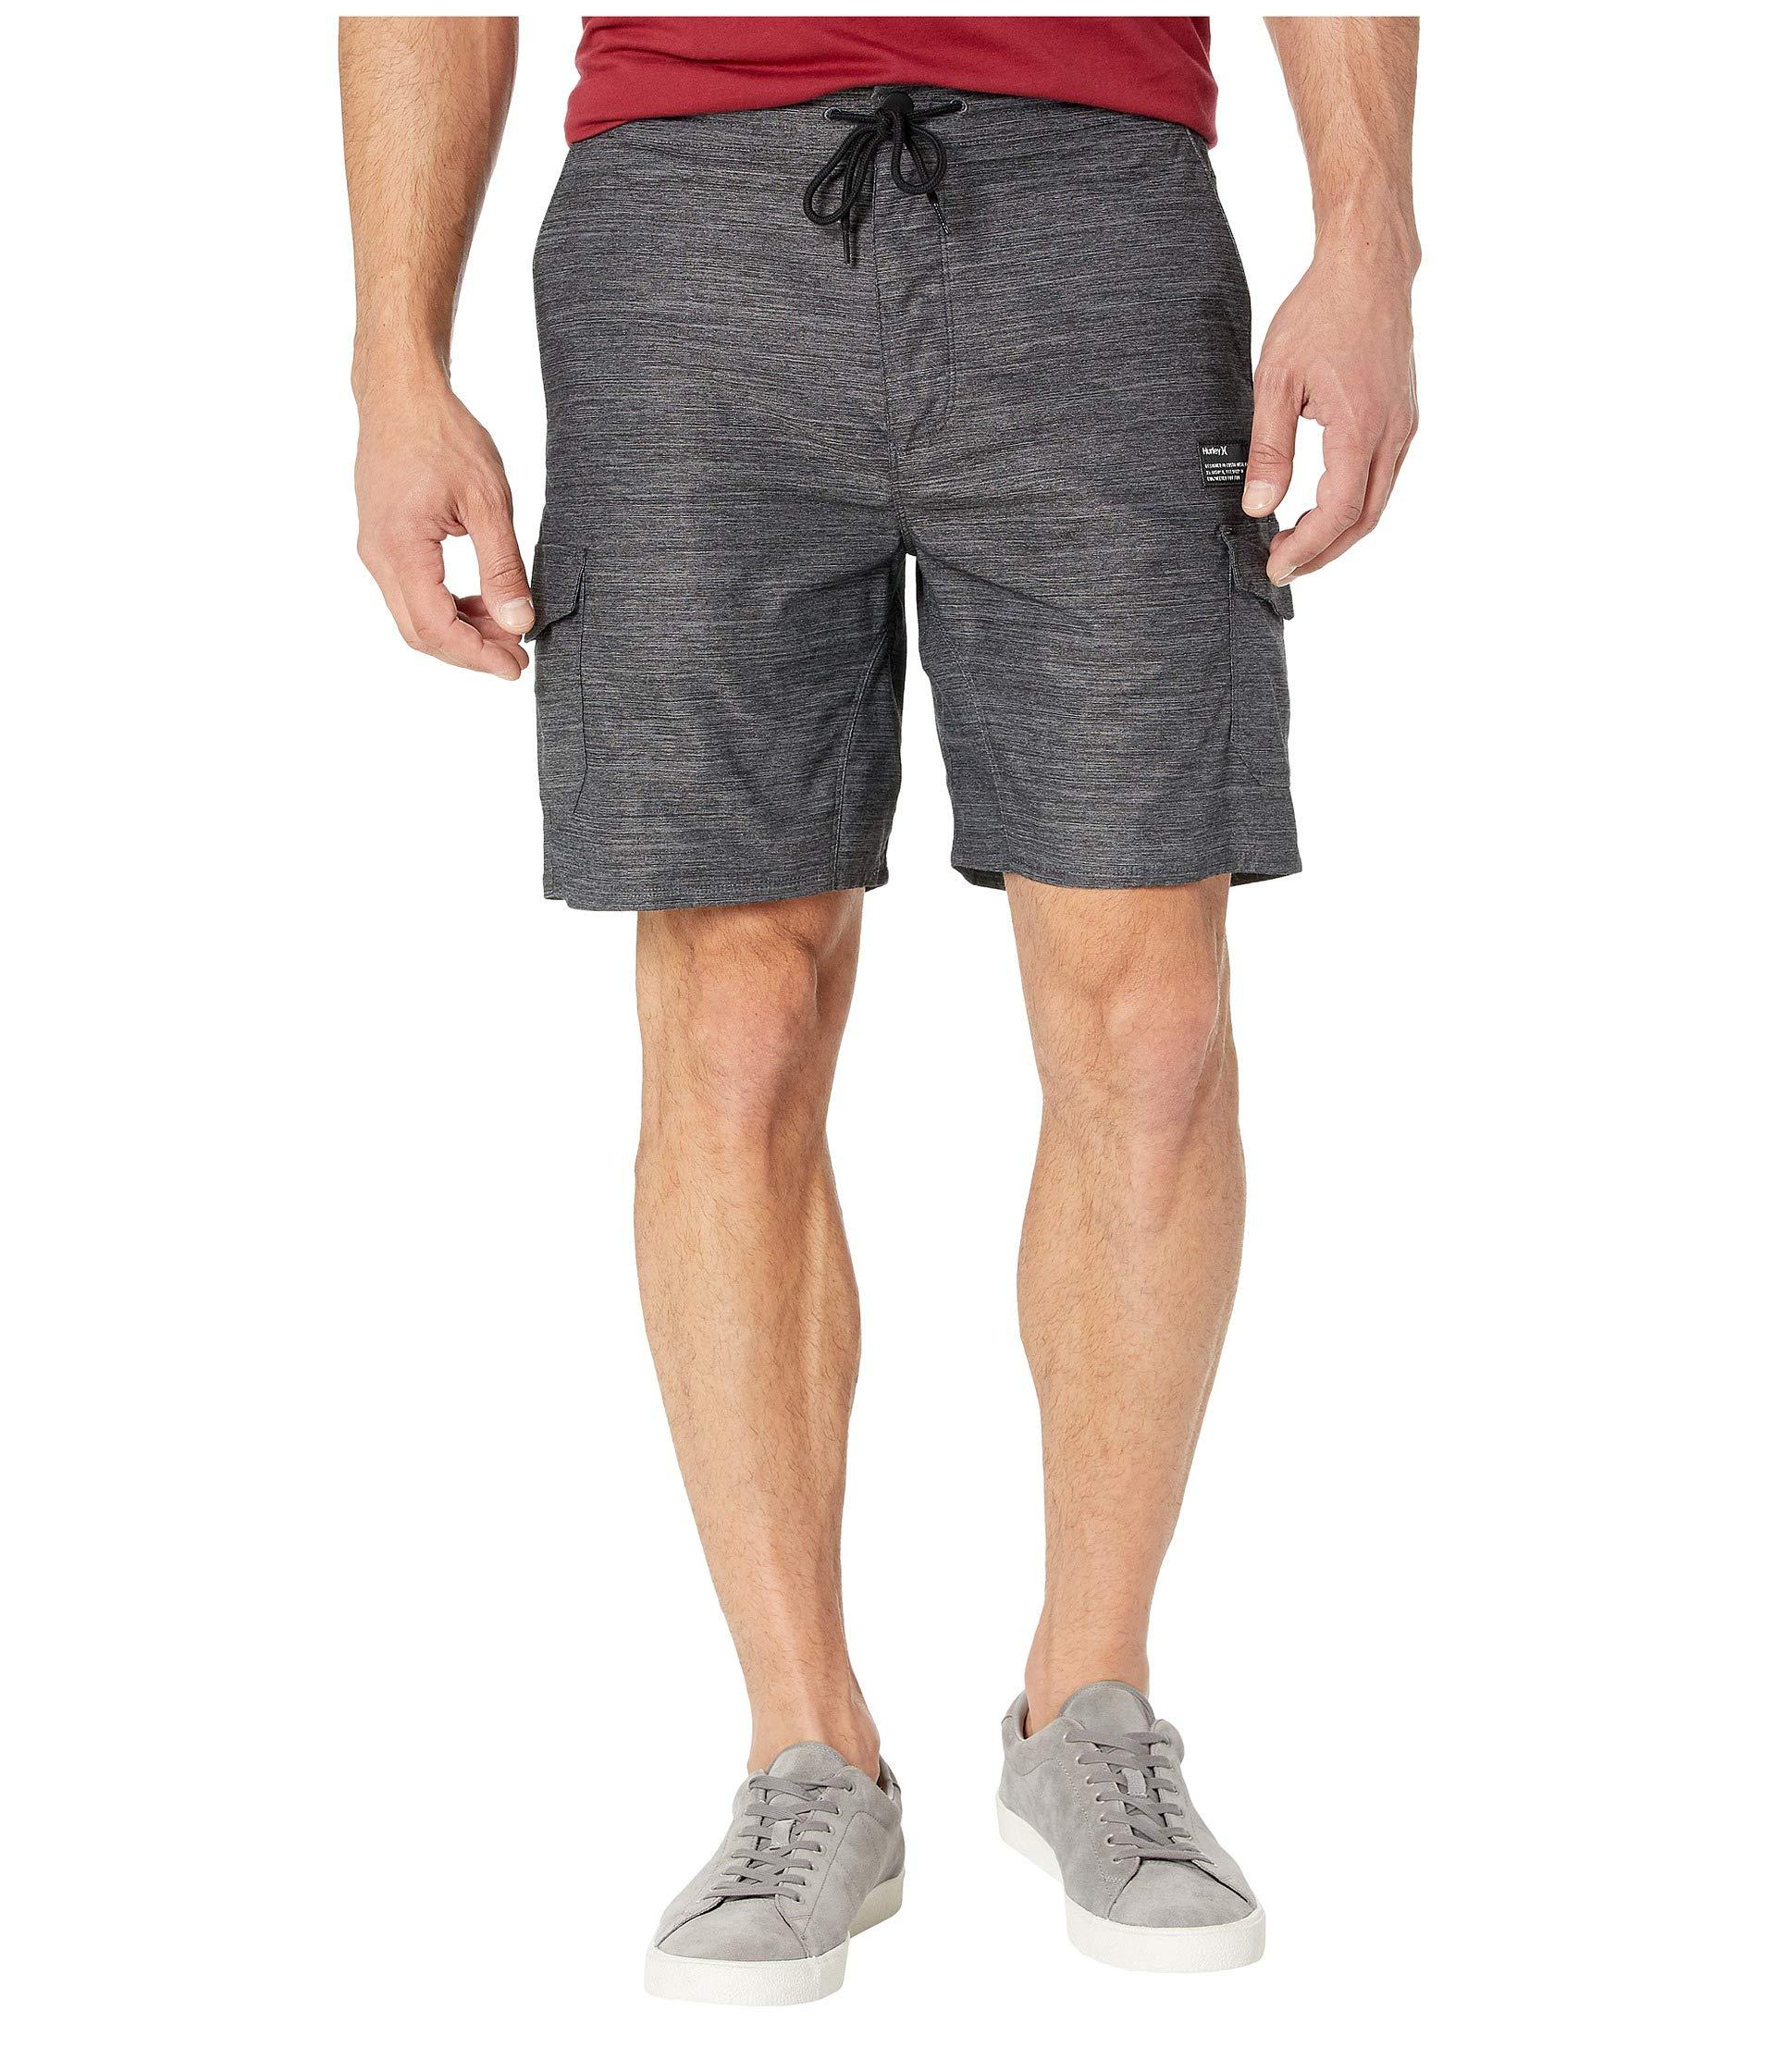 Hurley 19 Dri-fit Breathe Cargo Shorts in Black for Men - Lyst